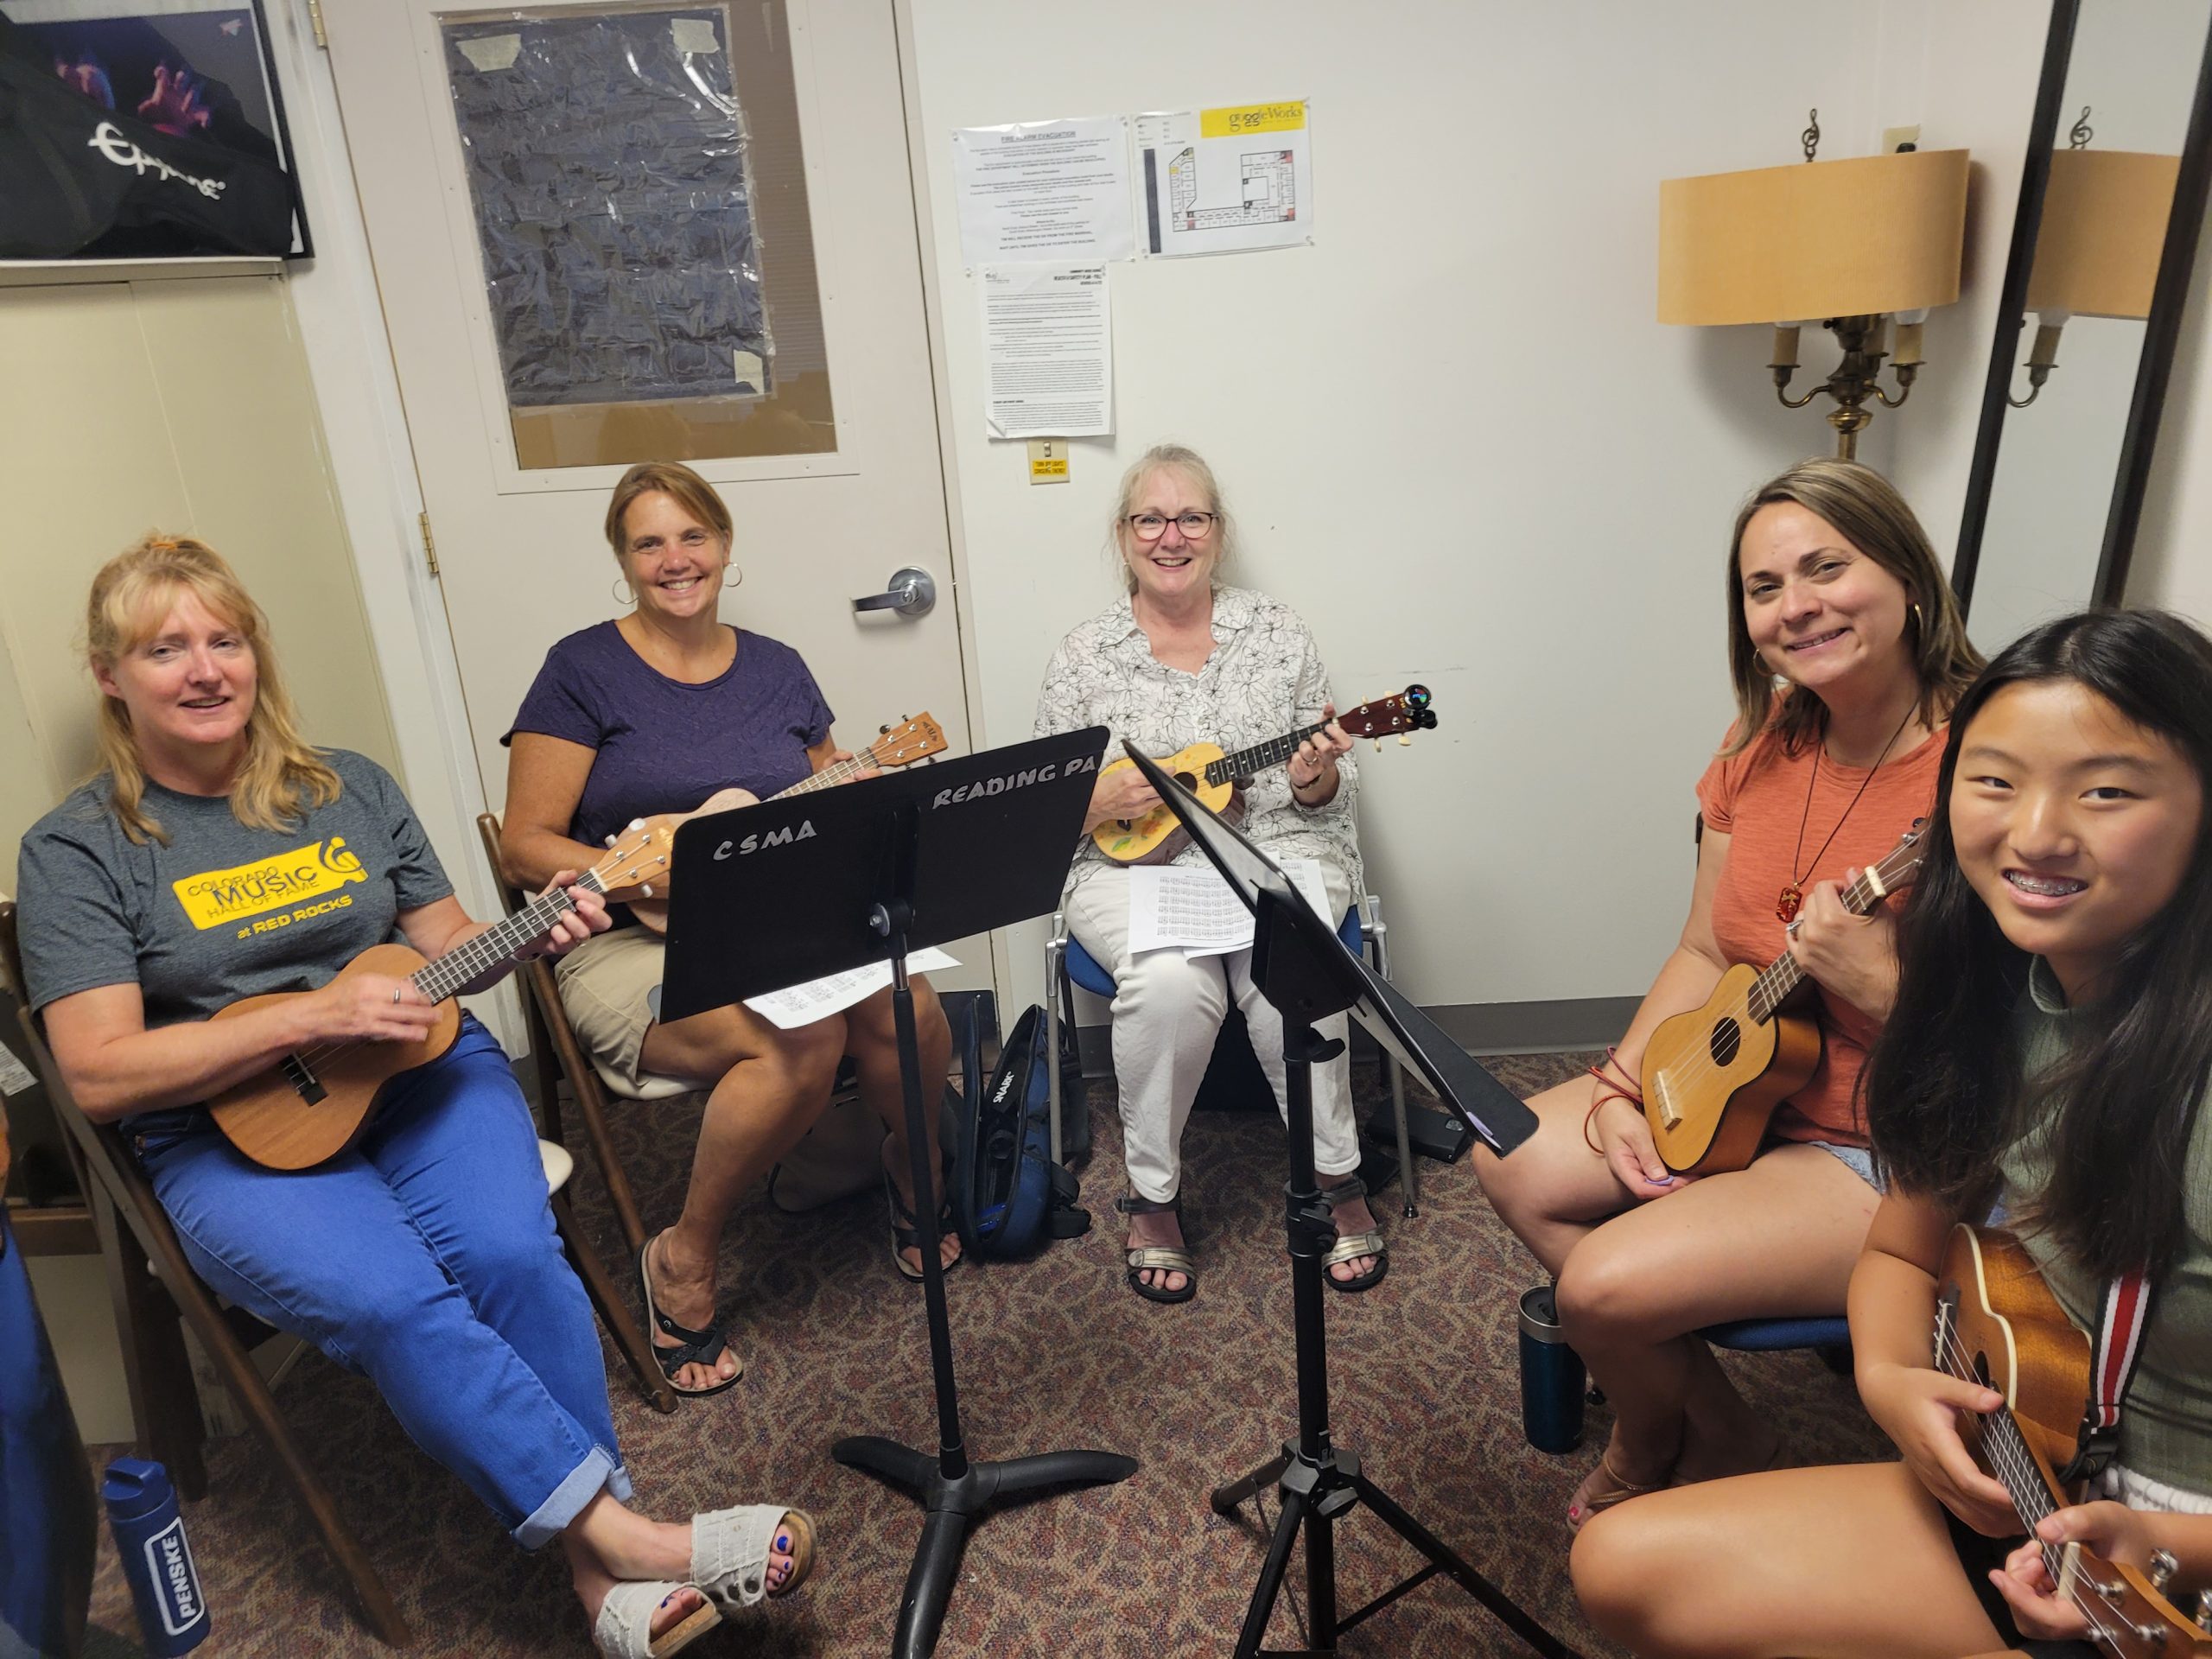 Intro to Ukulele Workshop Summer session at CMS Berks with Mikaela Krall - five women holding ukuleles and smiling